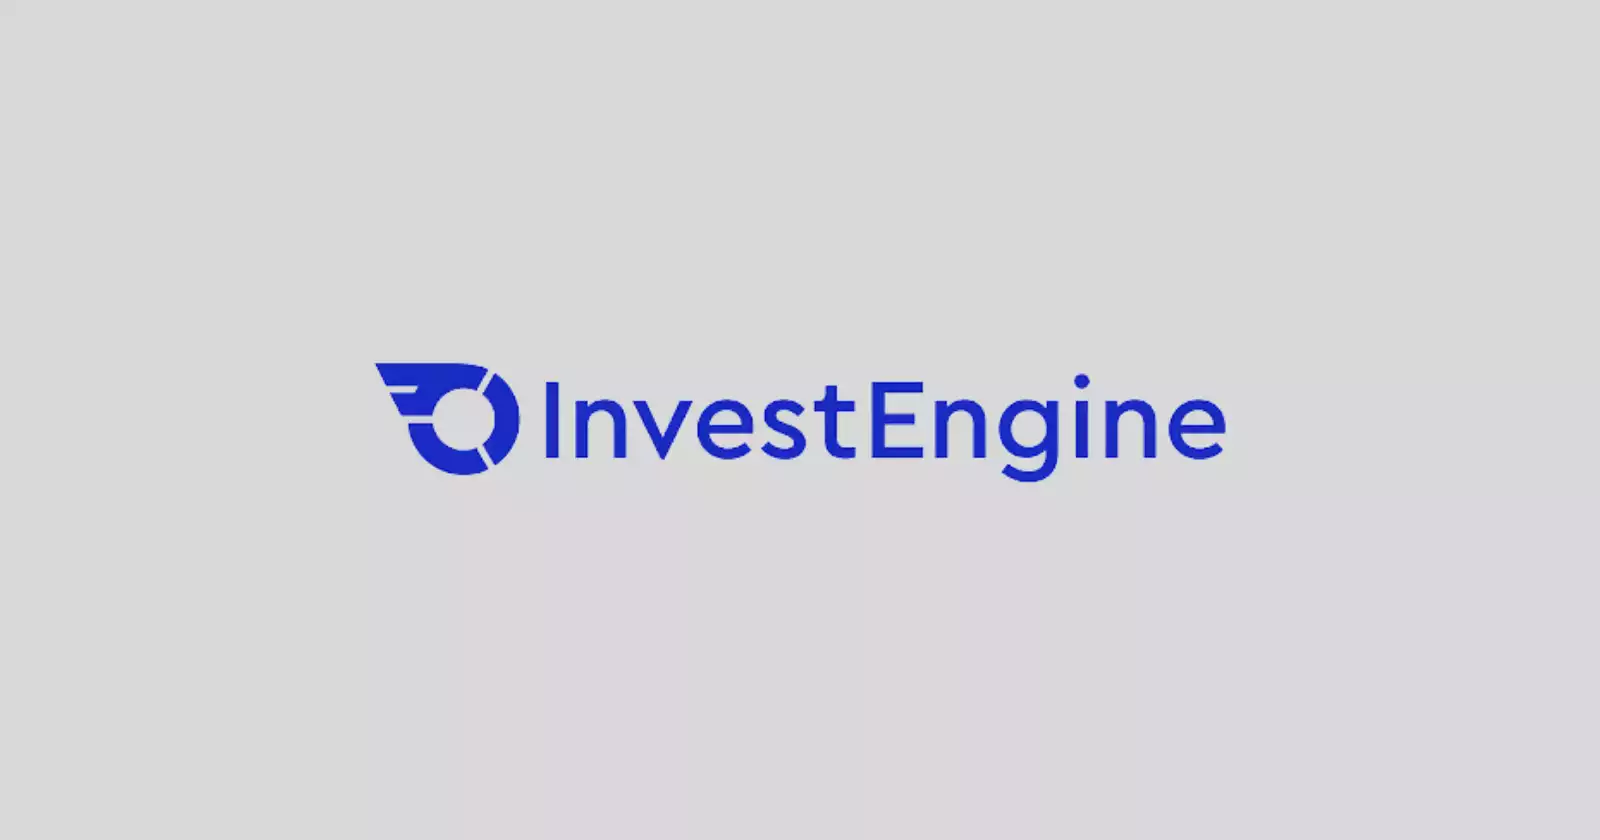 InvestEngine - The ETF Investing Platform